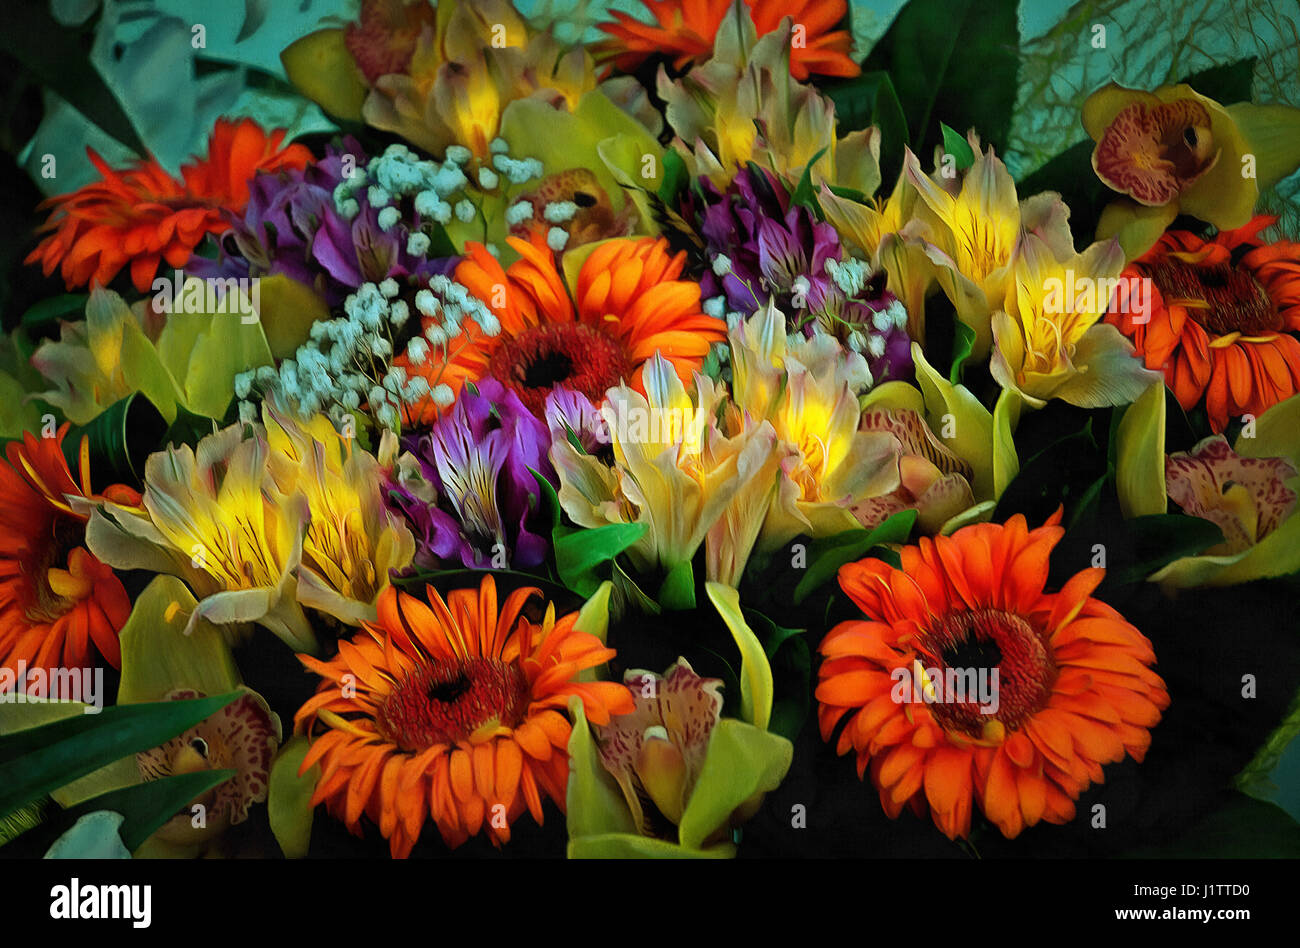 Illustrations,flowers, bouquet, Aquarell, orchids,chrysanthemum,Alstroemeria, watercolor Stock Photo